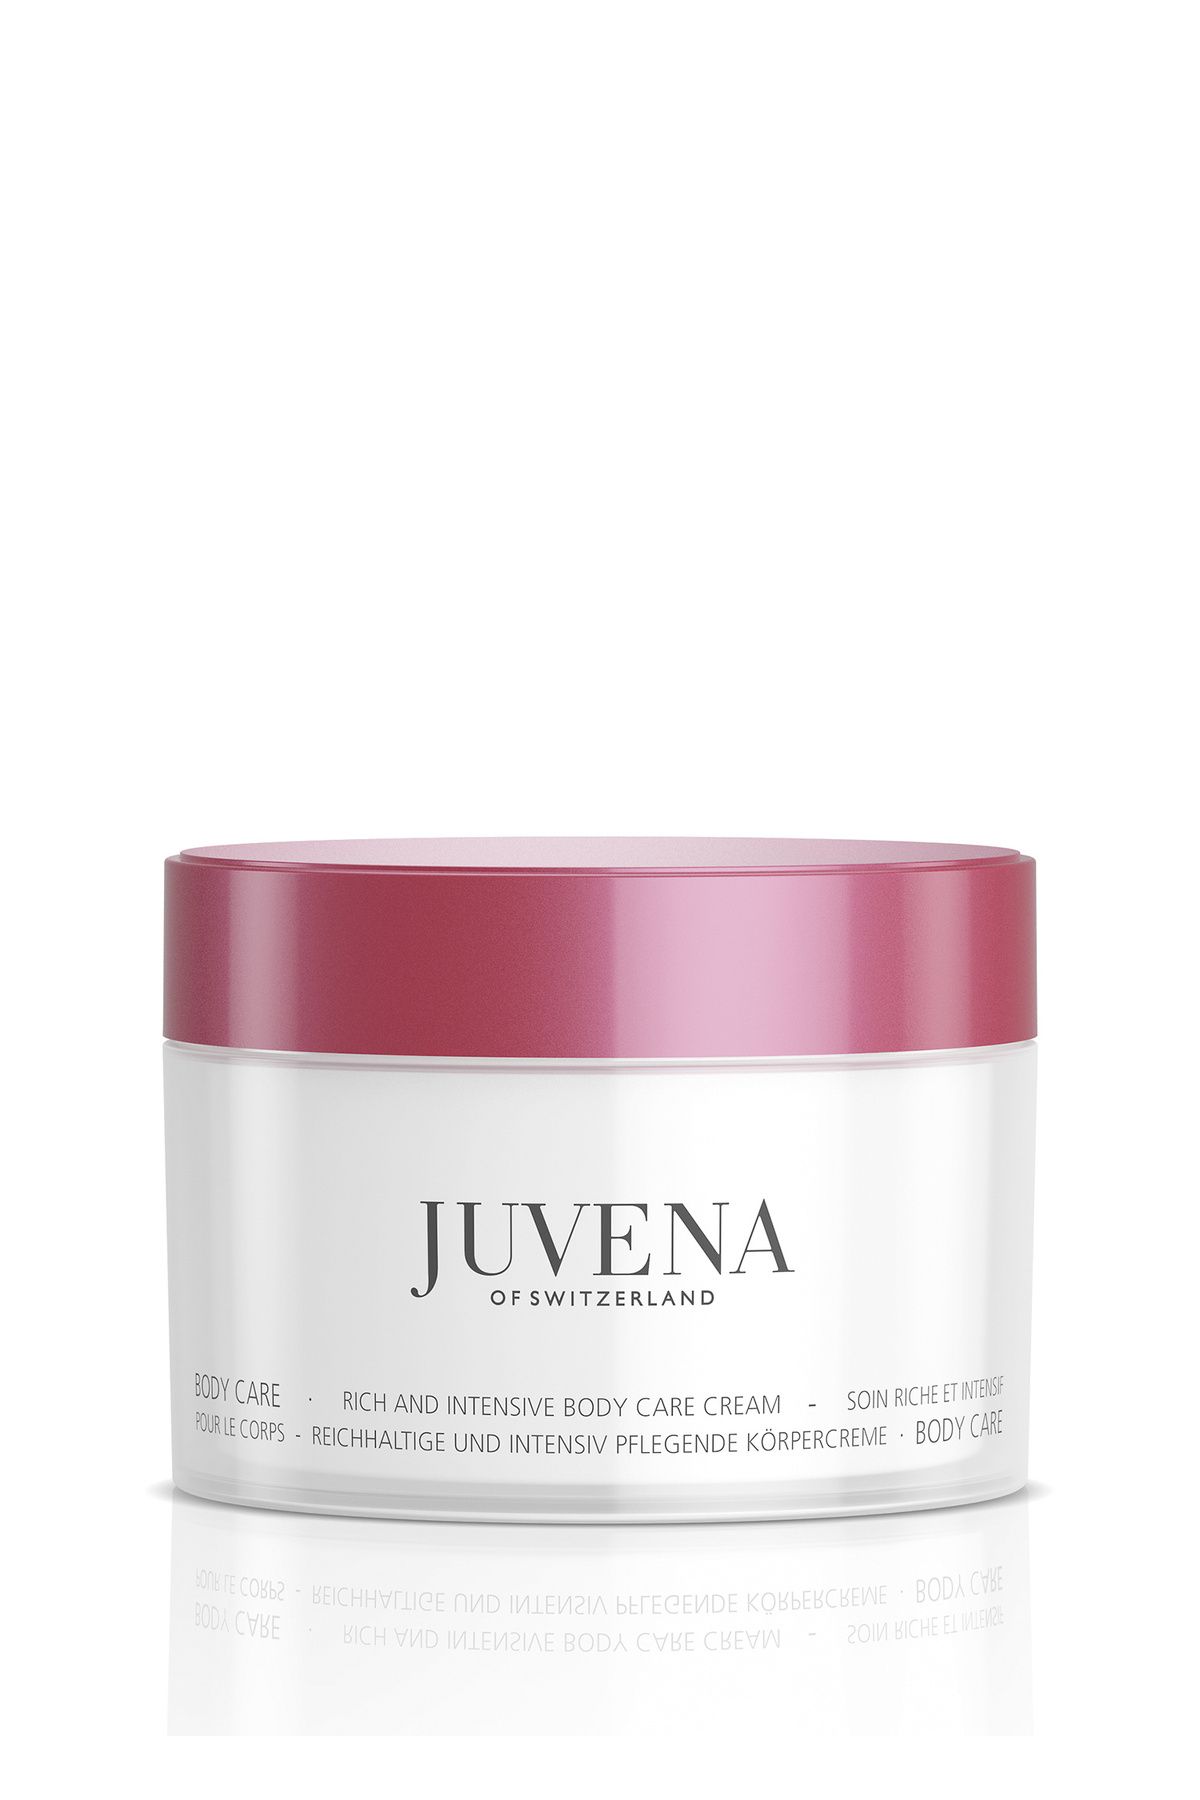 Juvena Rich and Intensive Body Care Cream 200ml